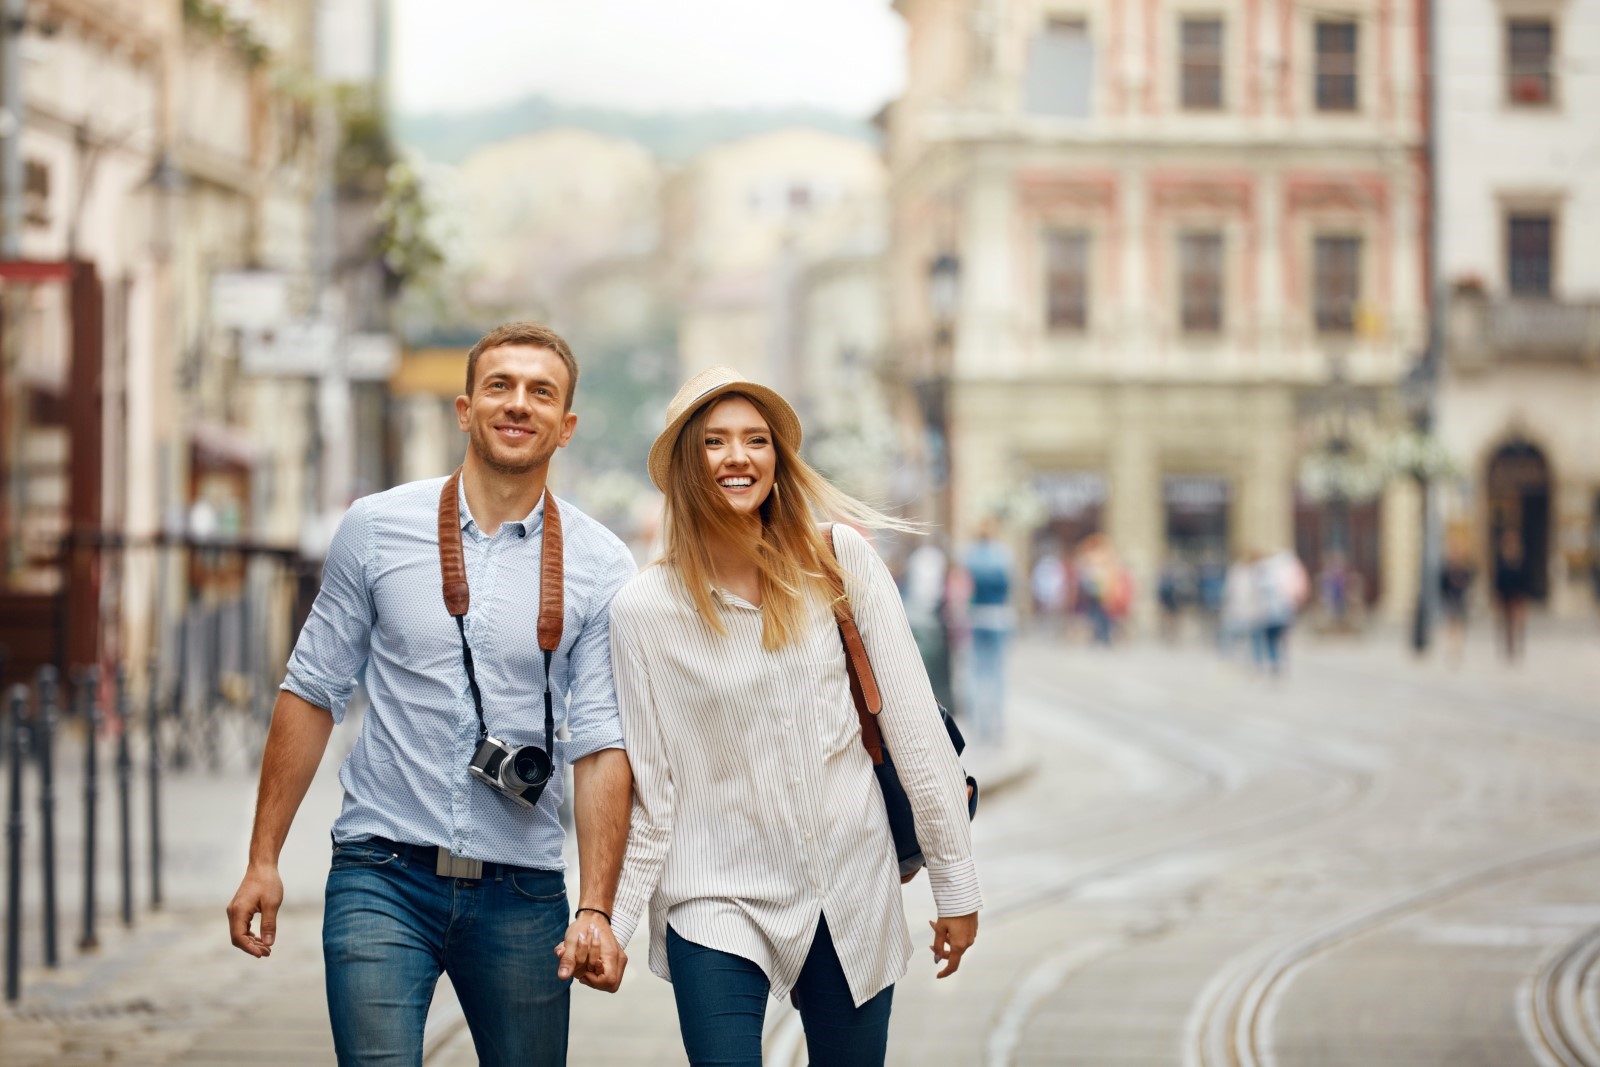 Tourist couple walking down a European city street.